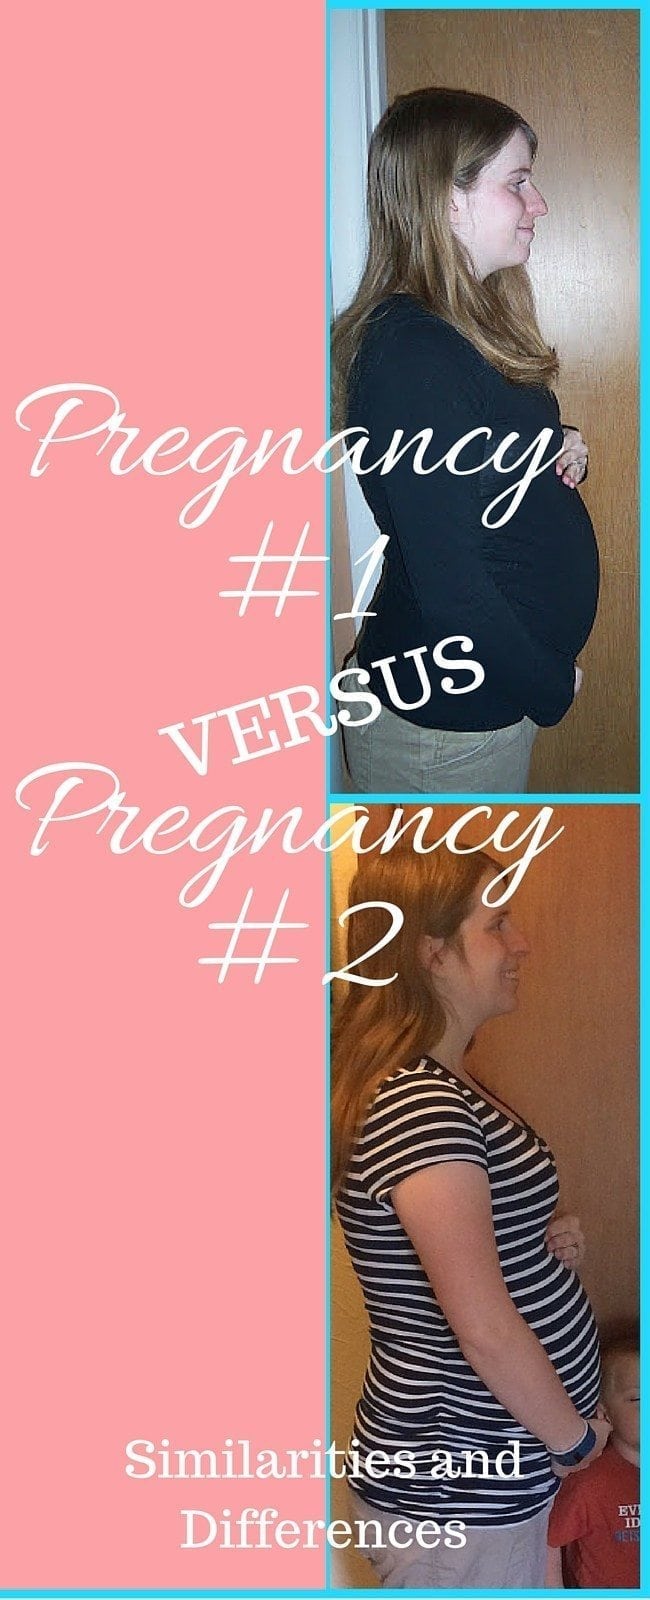 Pregnancy #1 (2)